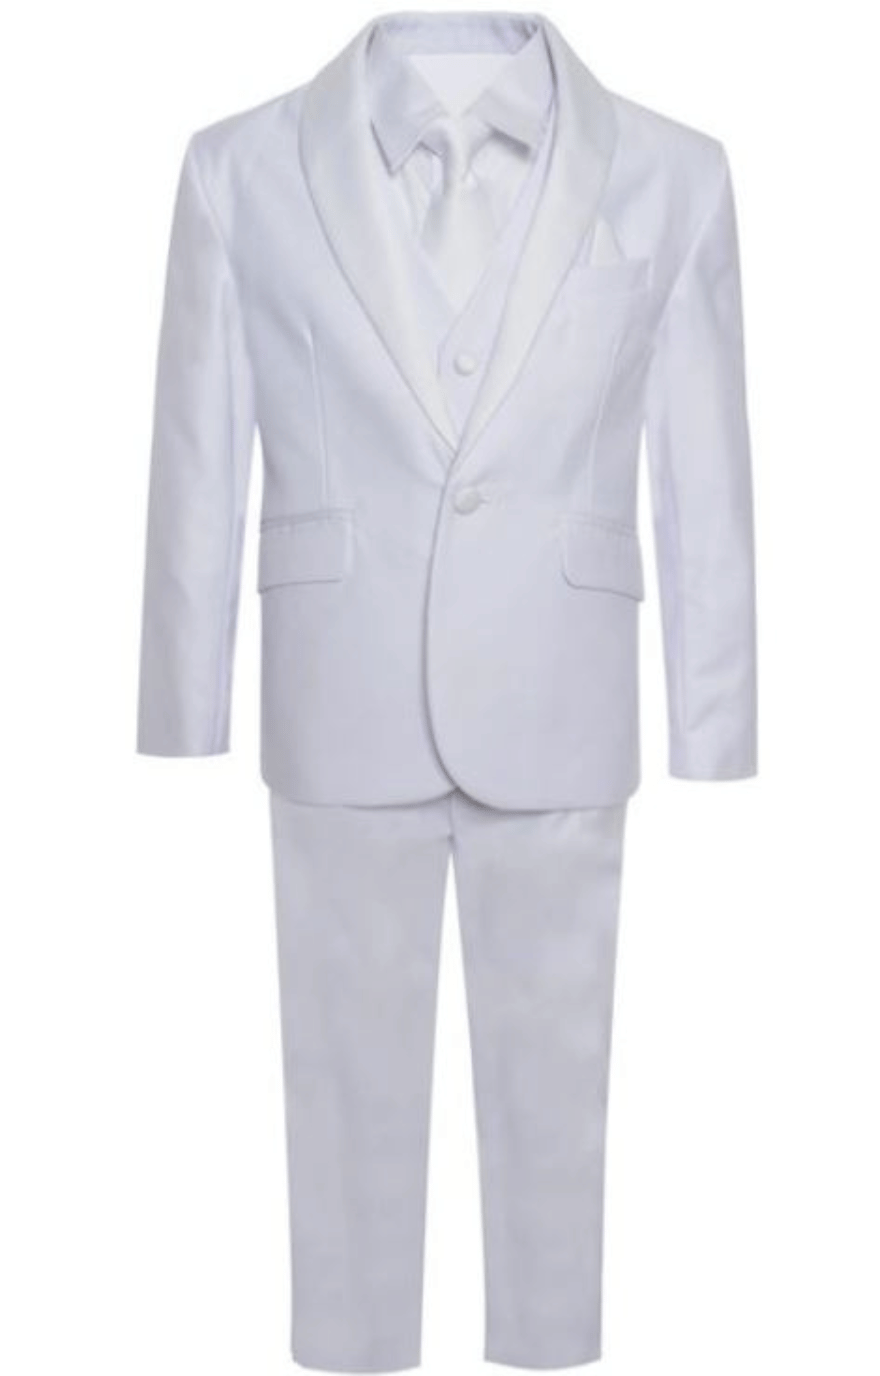 George 5pc Boys Tuxedo: WHITE (Slim Fit)